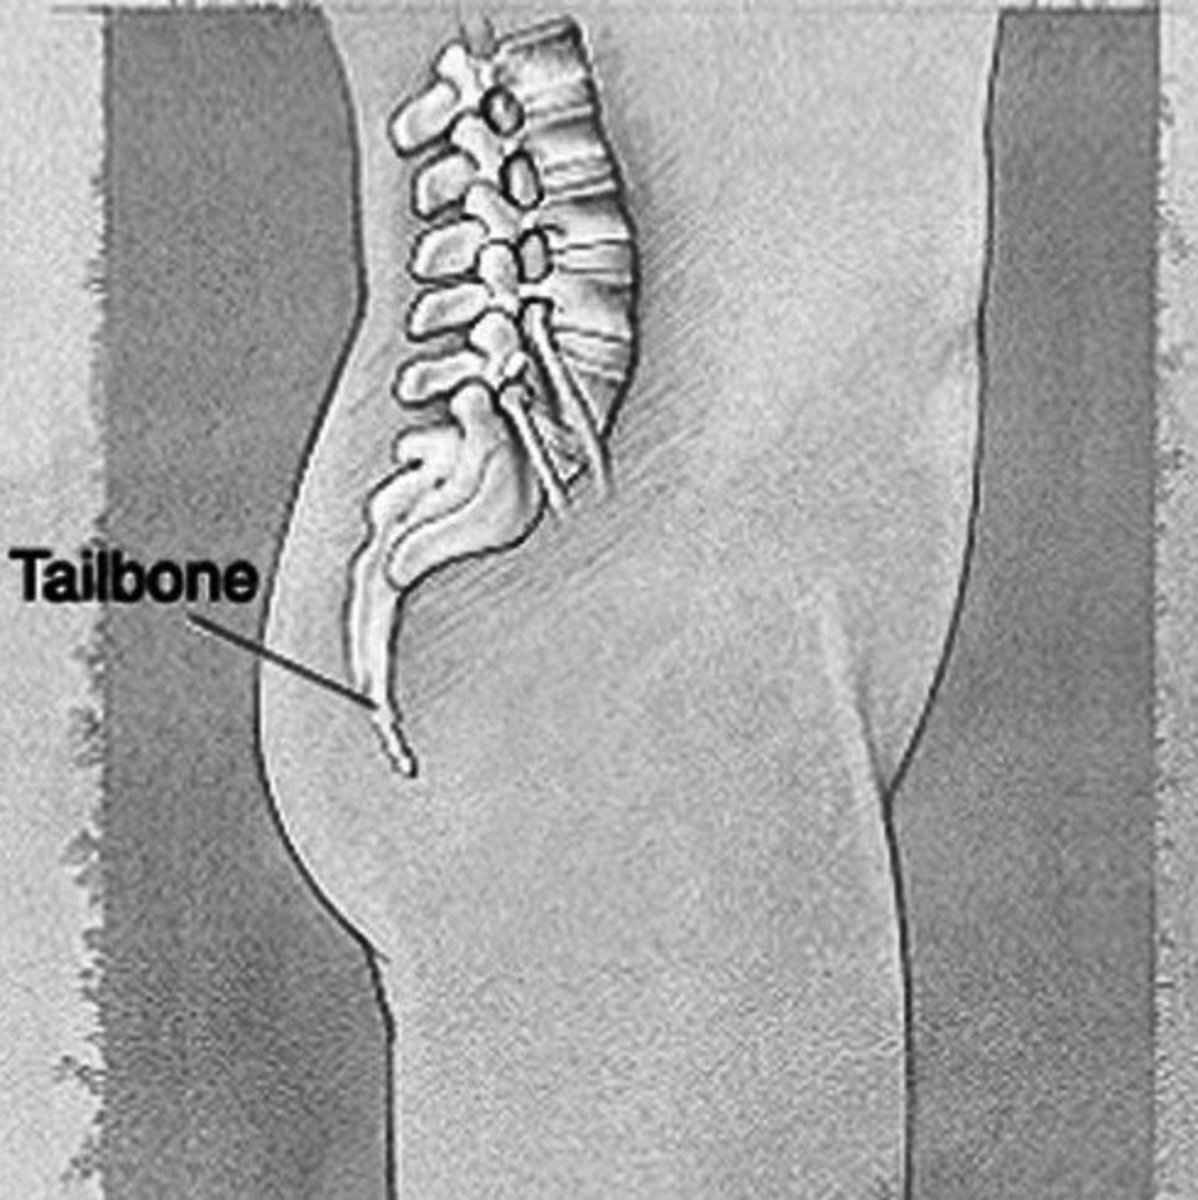 bruised-tailbone